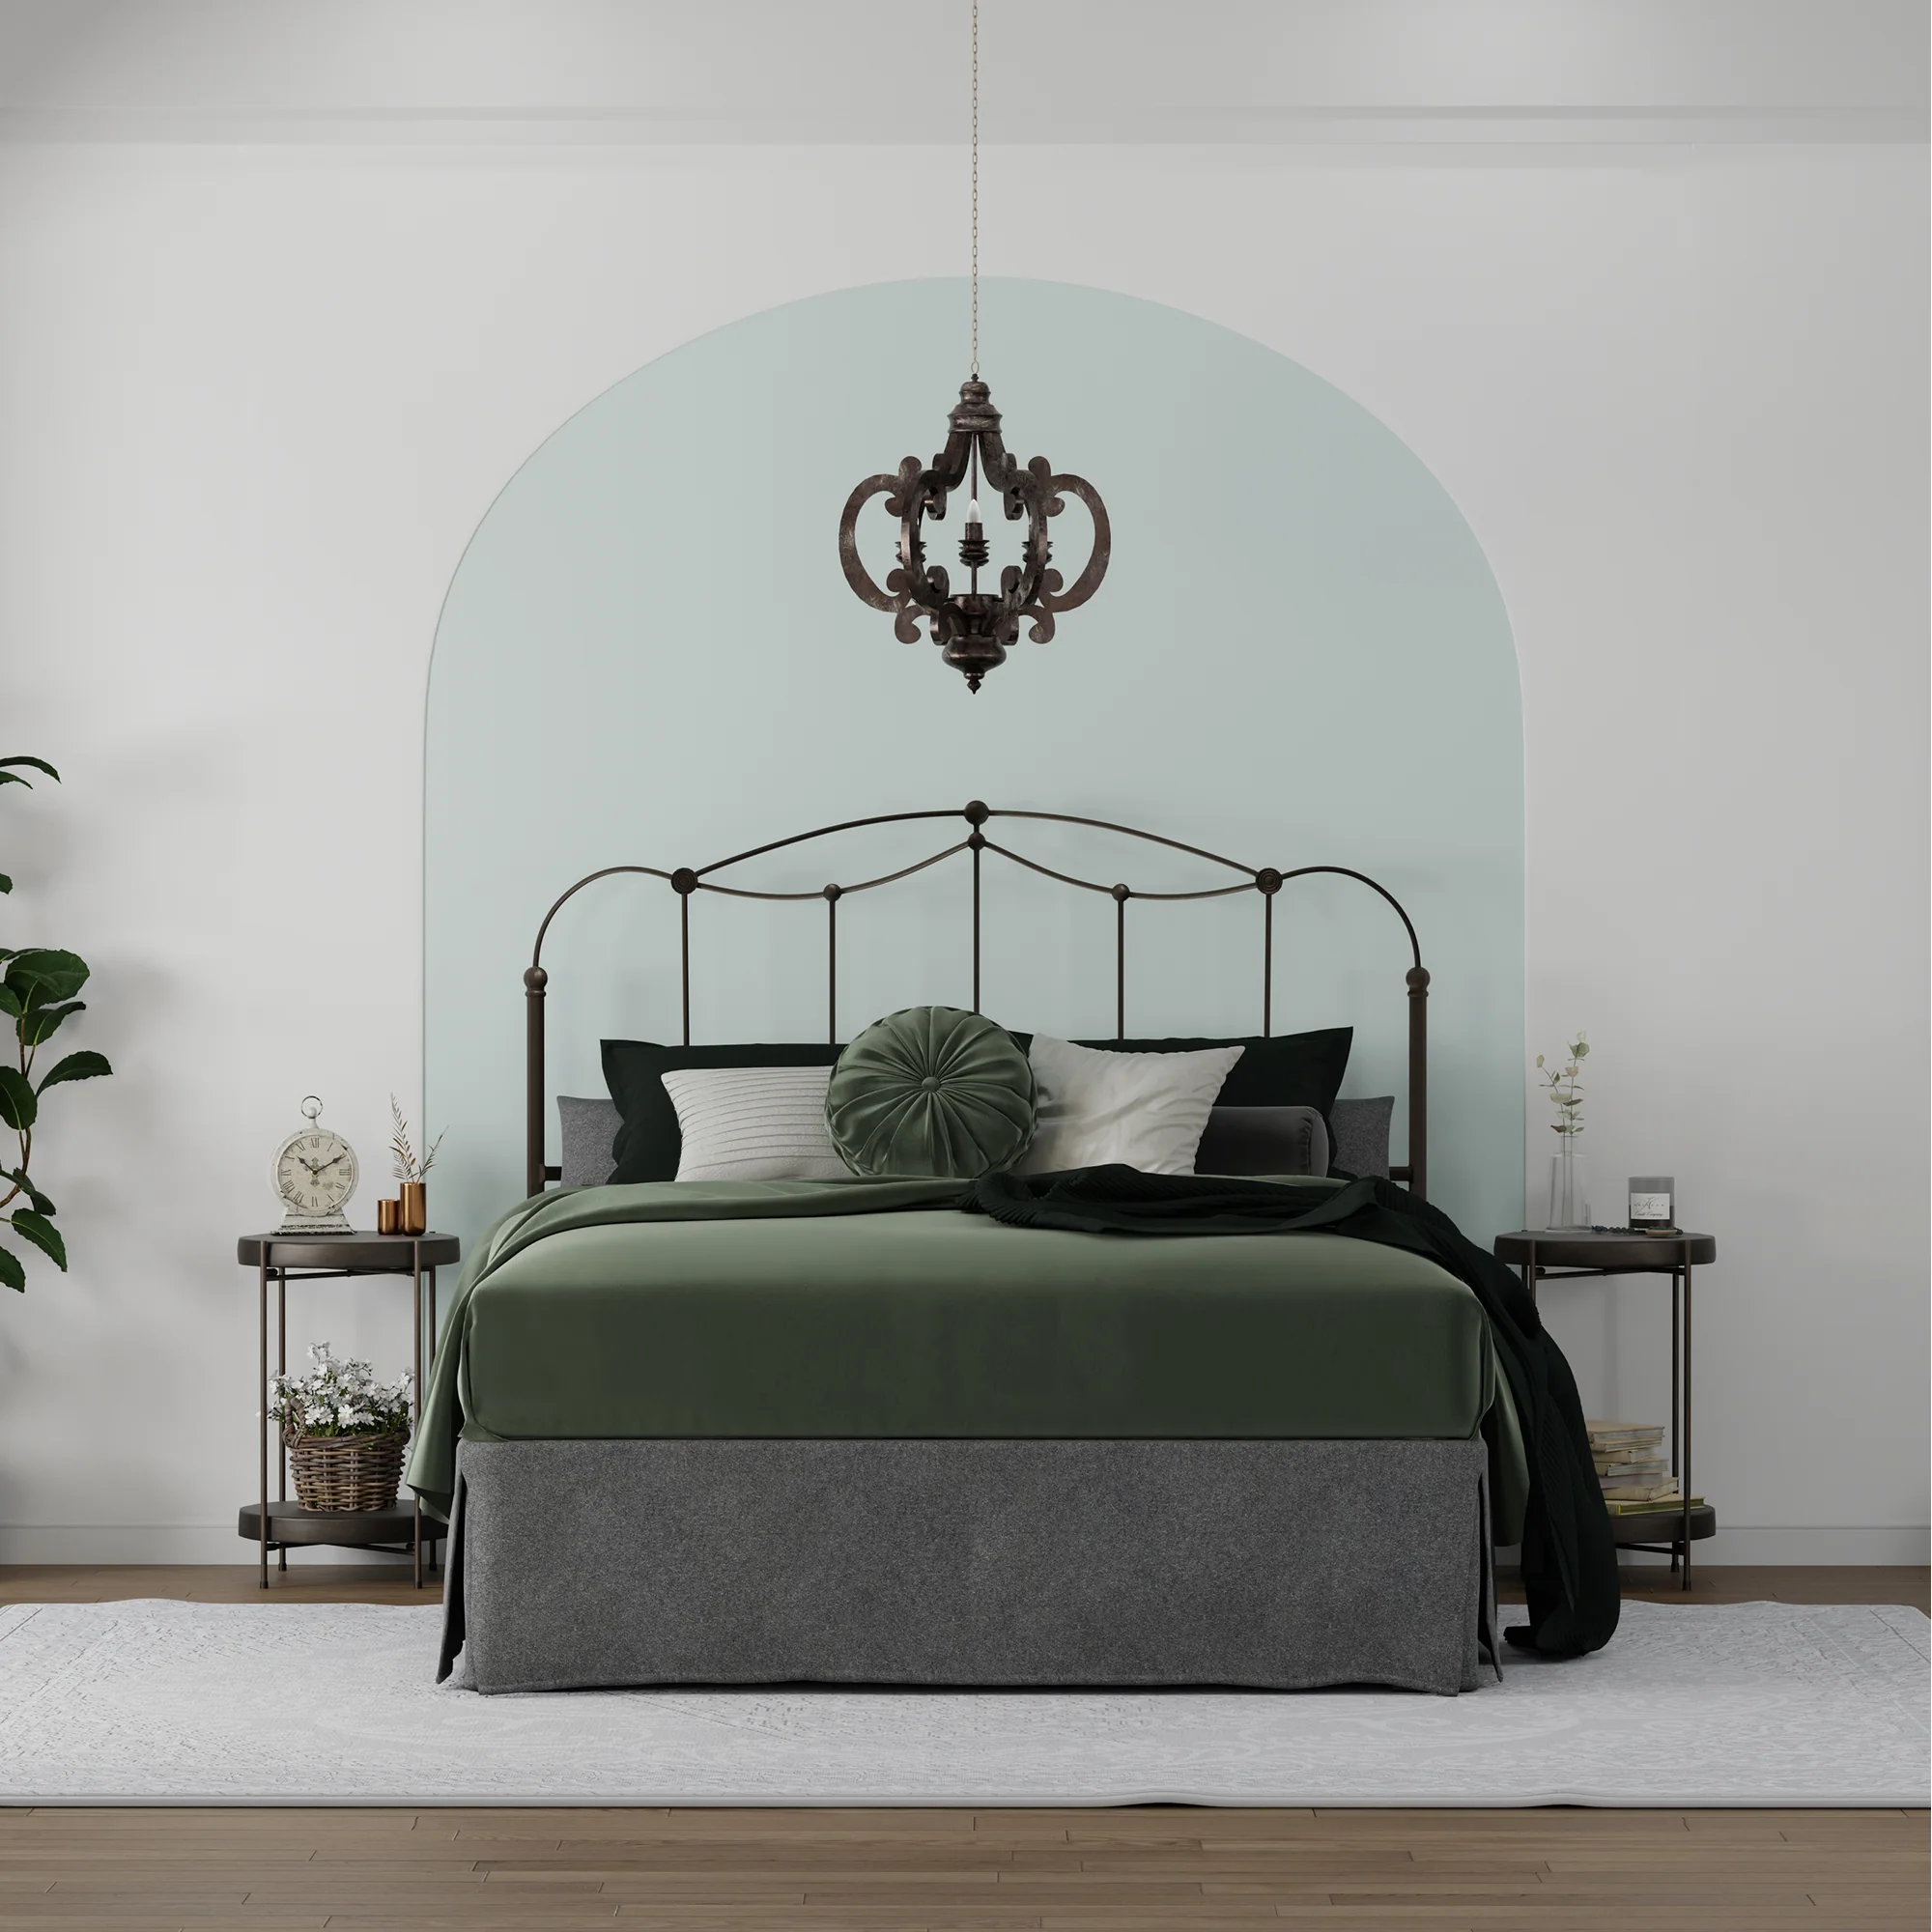 eLuxury bedroom design - Affinity Headboard